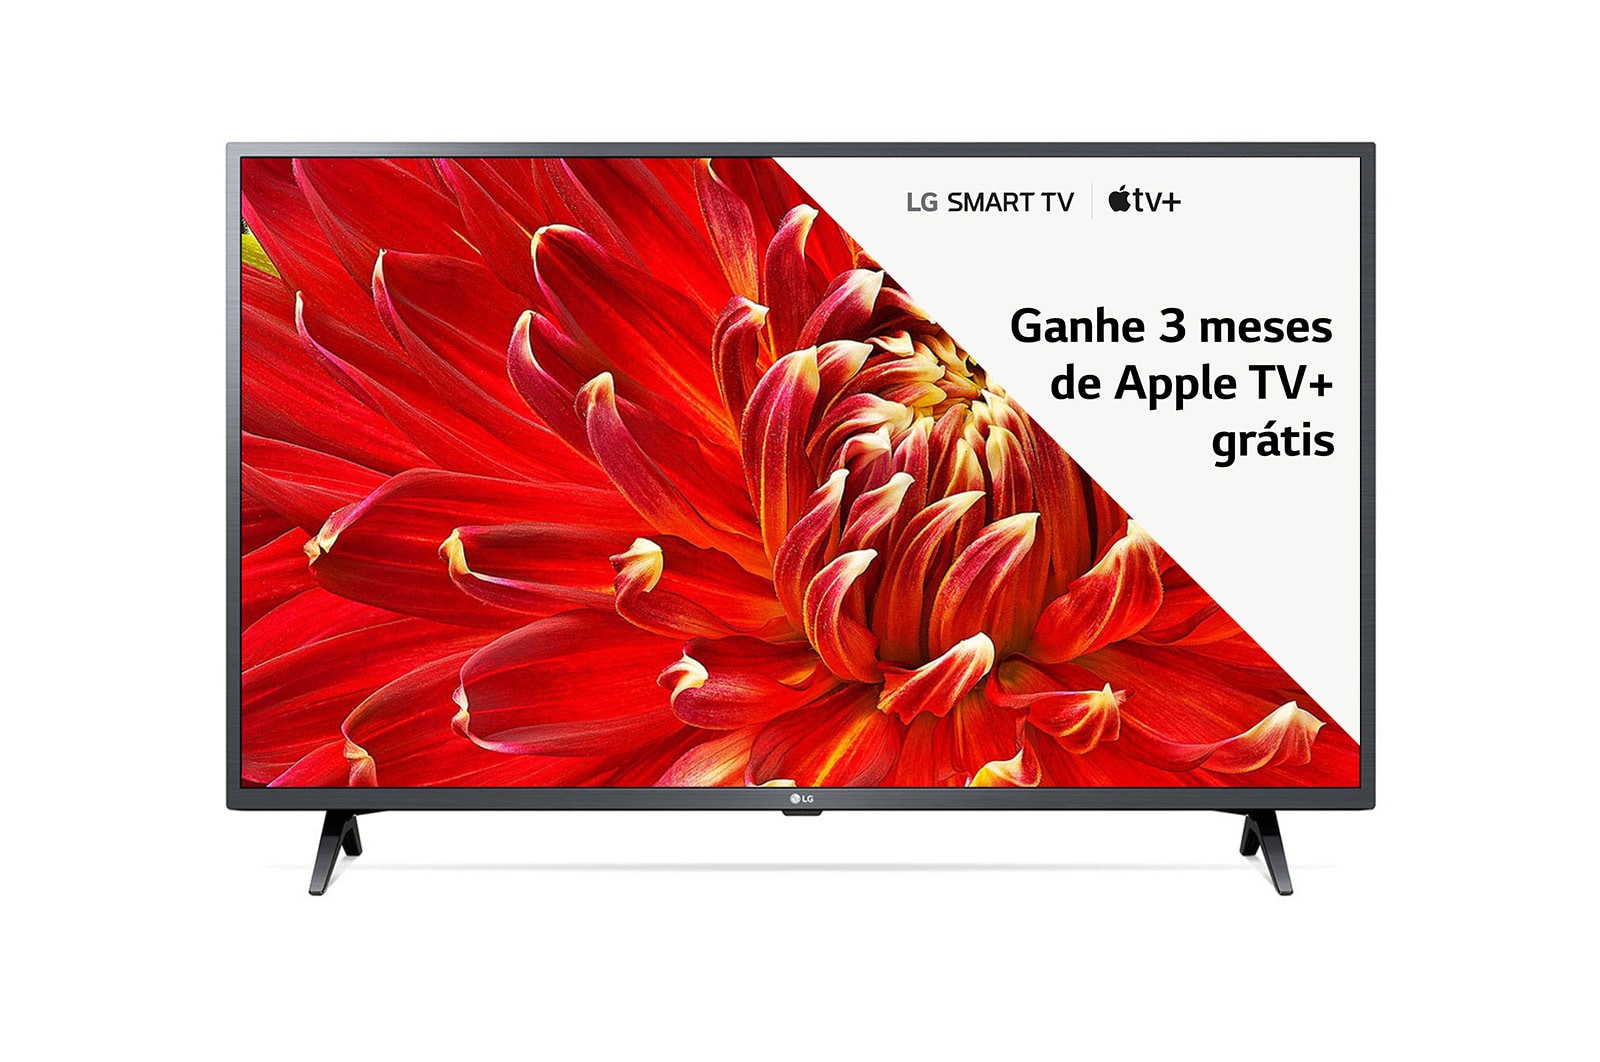 LG Smart TV LG 43" Full HD - HDR Ativo, webOS 4.5 ThinQ AI Processador Quad Core, 43LM631C0SB